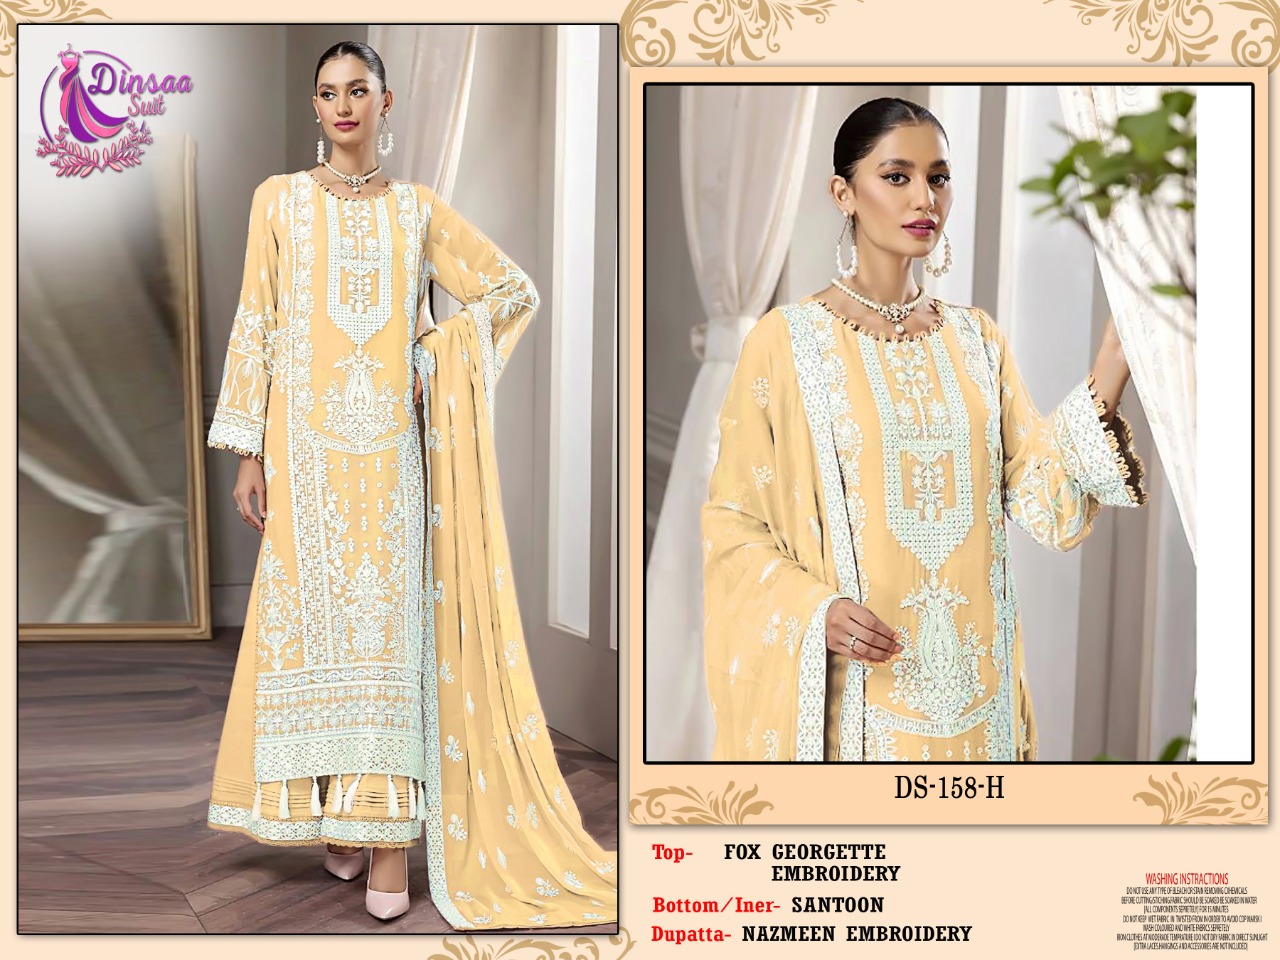 Buy Georgette Embroidery Ds 158 Efgh Dinsaa Suit Pakistani S